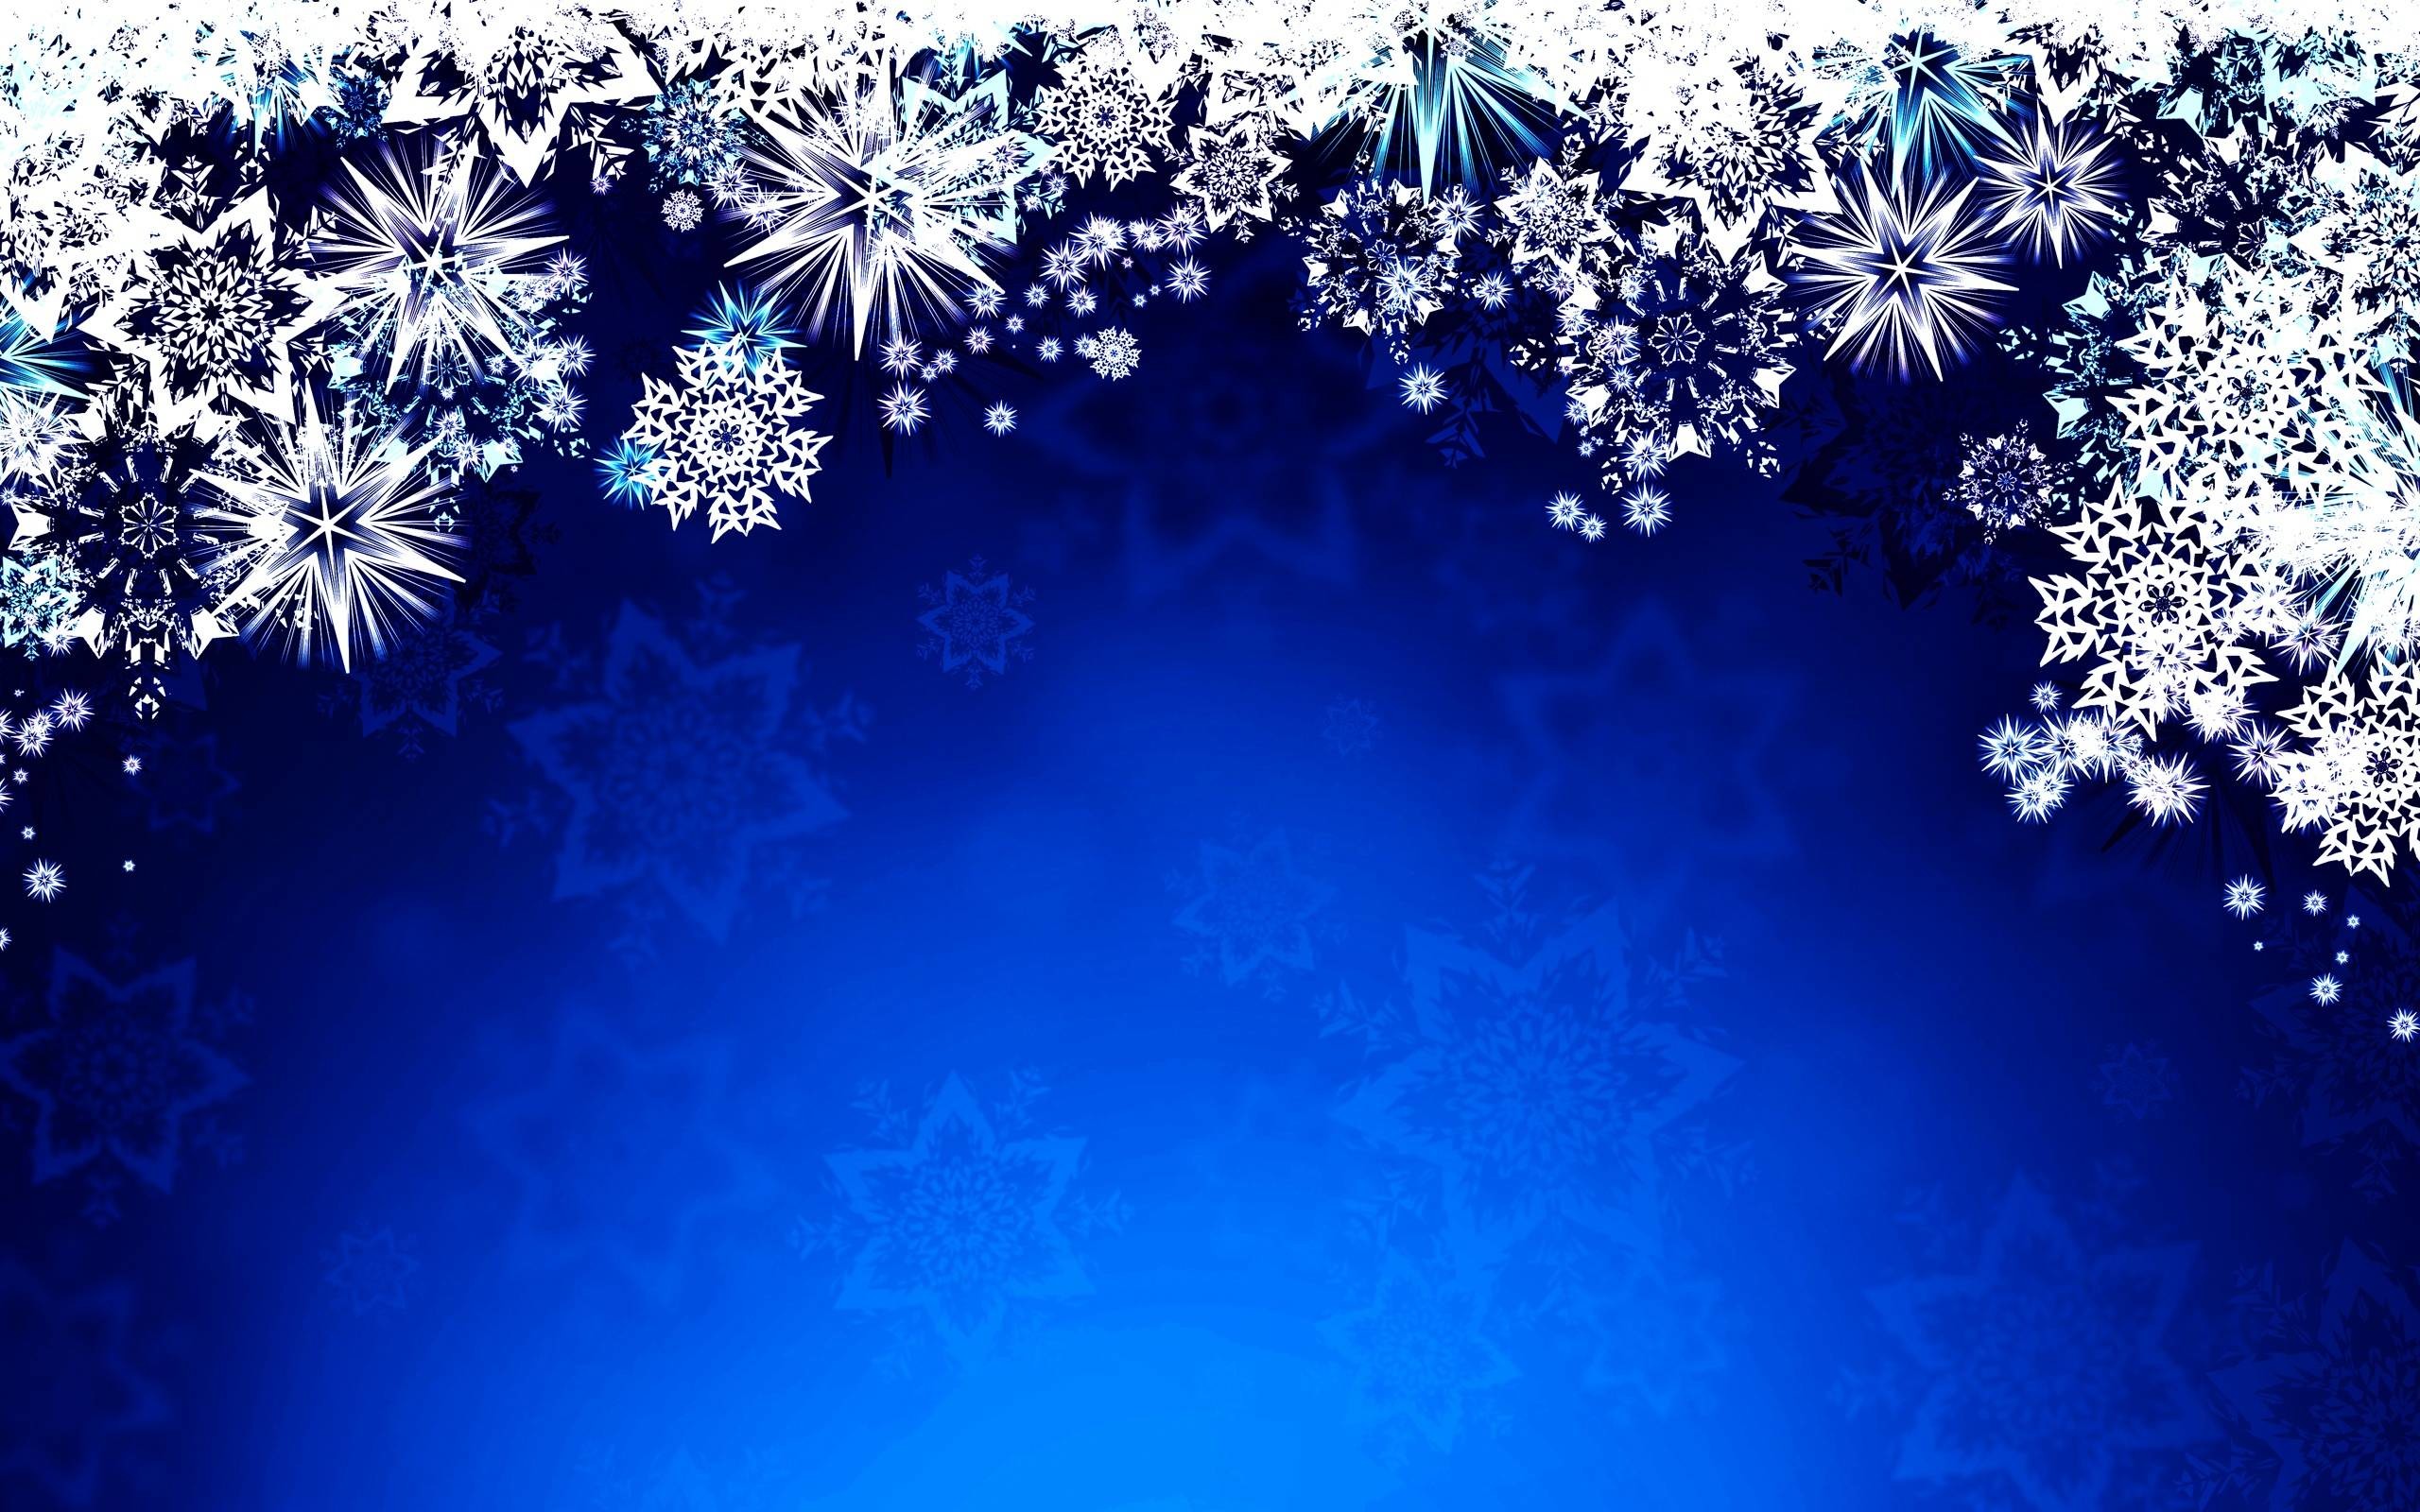 snowflake wallpaper hd,blue,snowflake,text,sky,winter